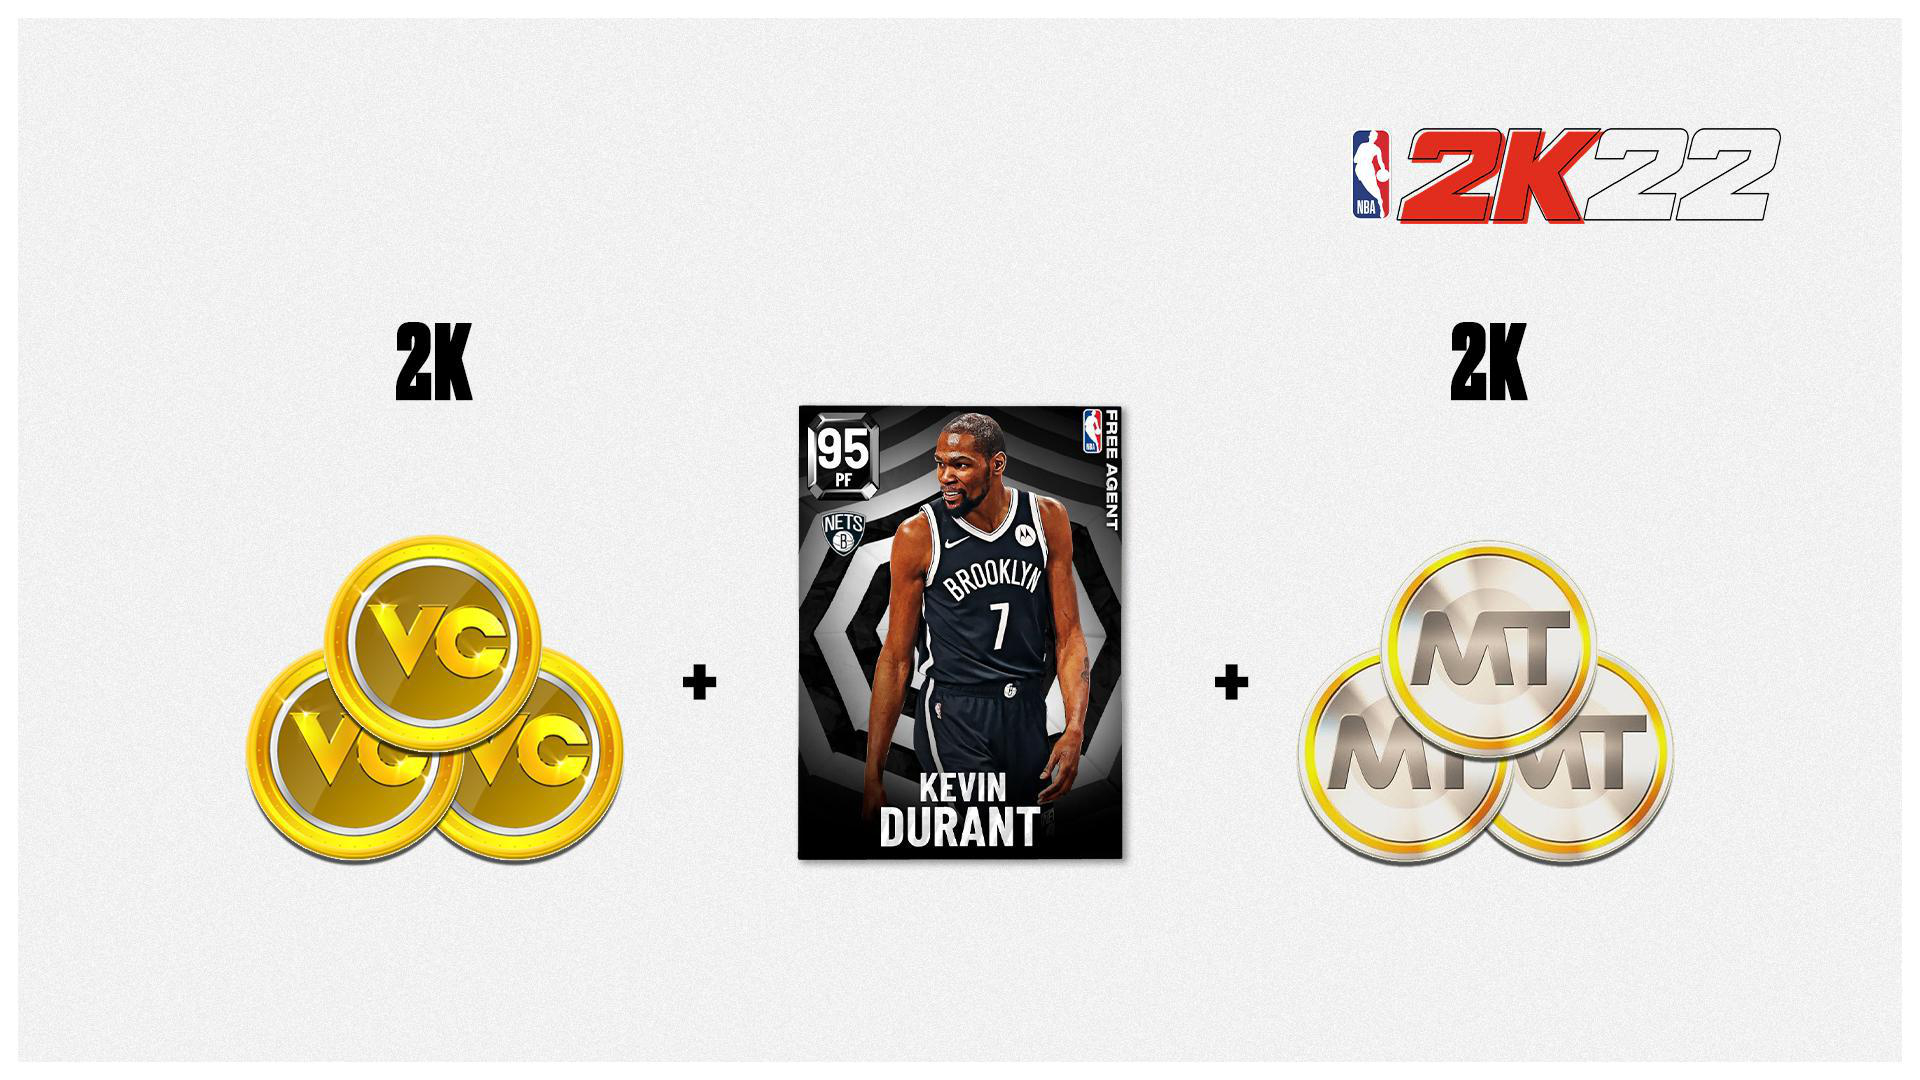 NBA 2K22 X] Series [Xbox 